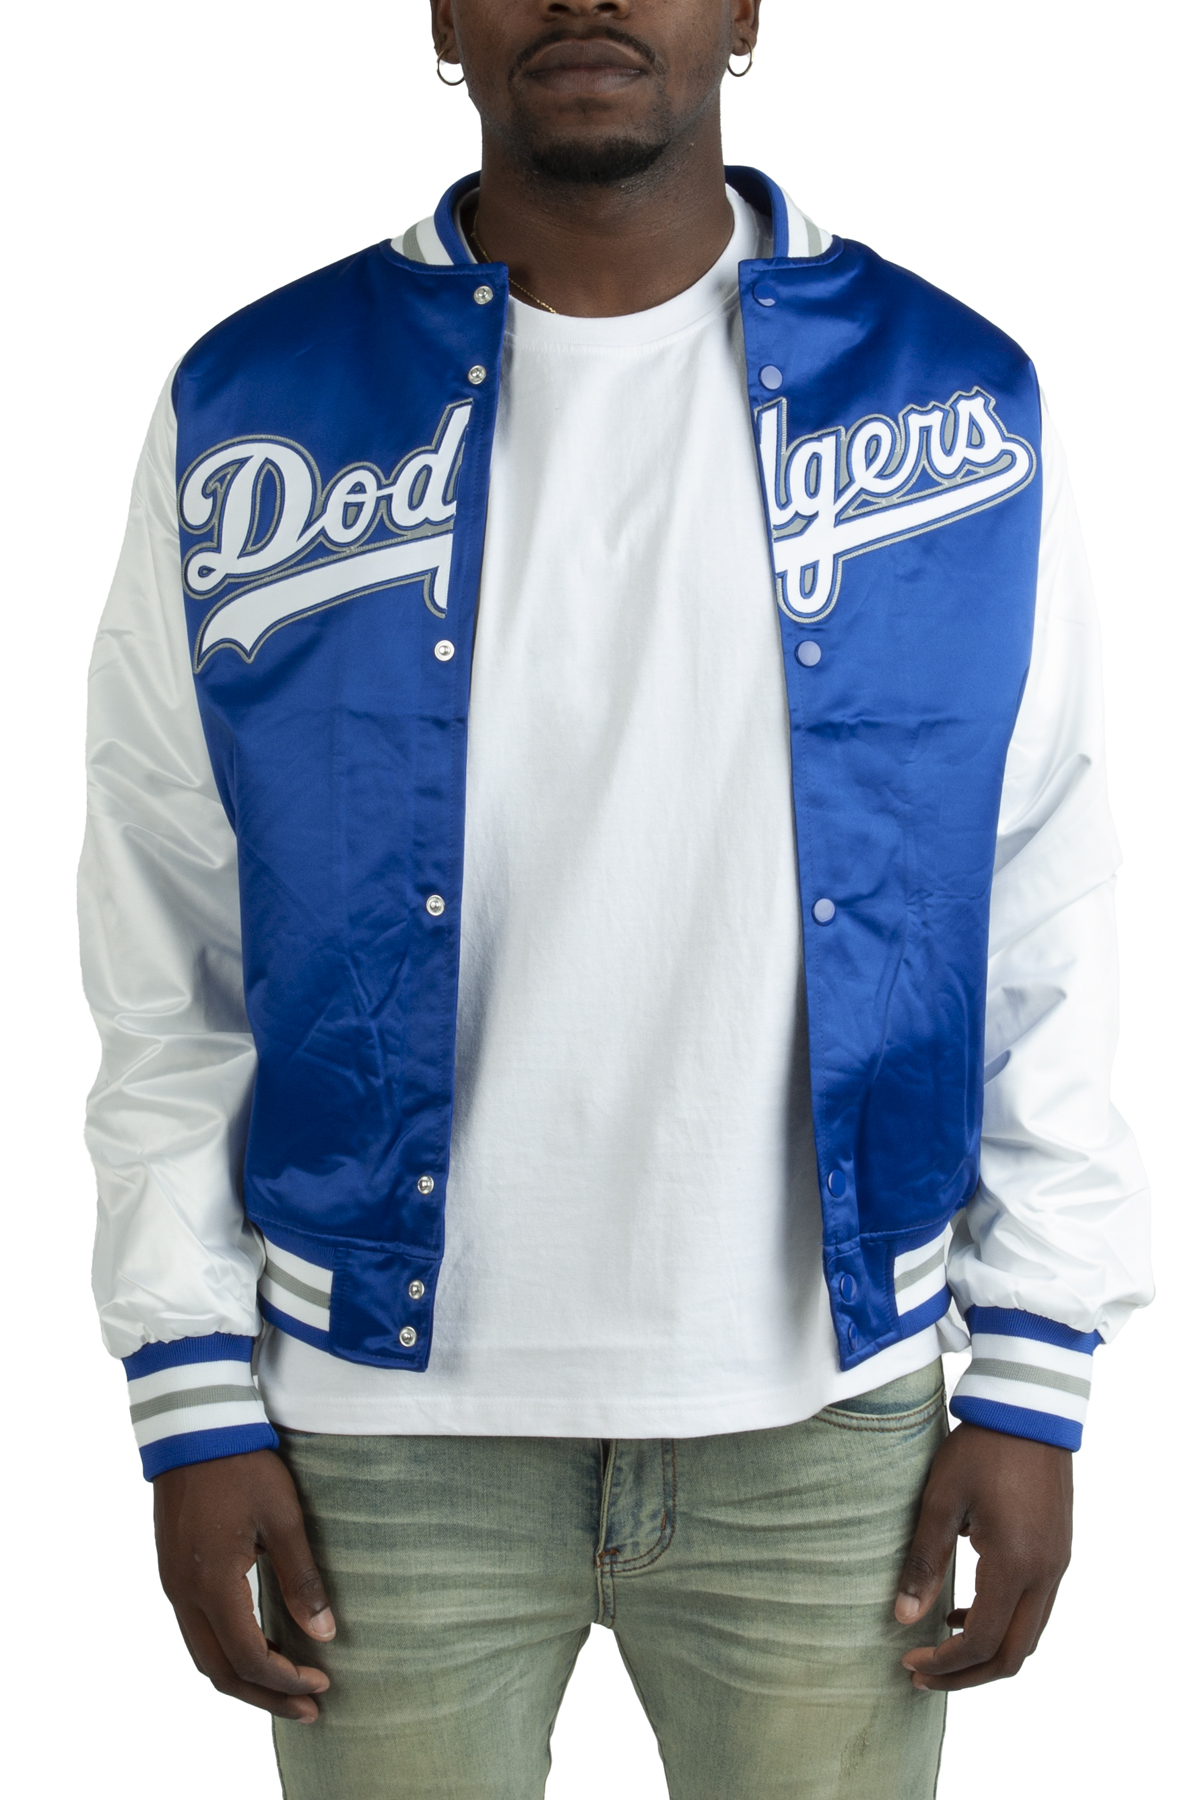 Dodgers Denim Jacket 